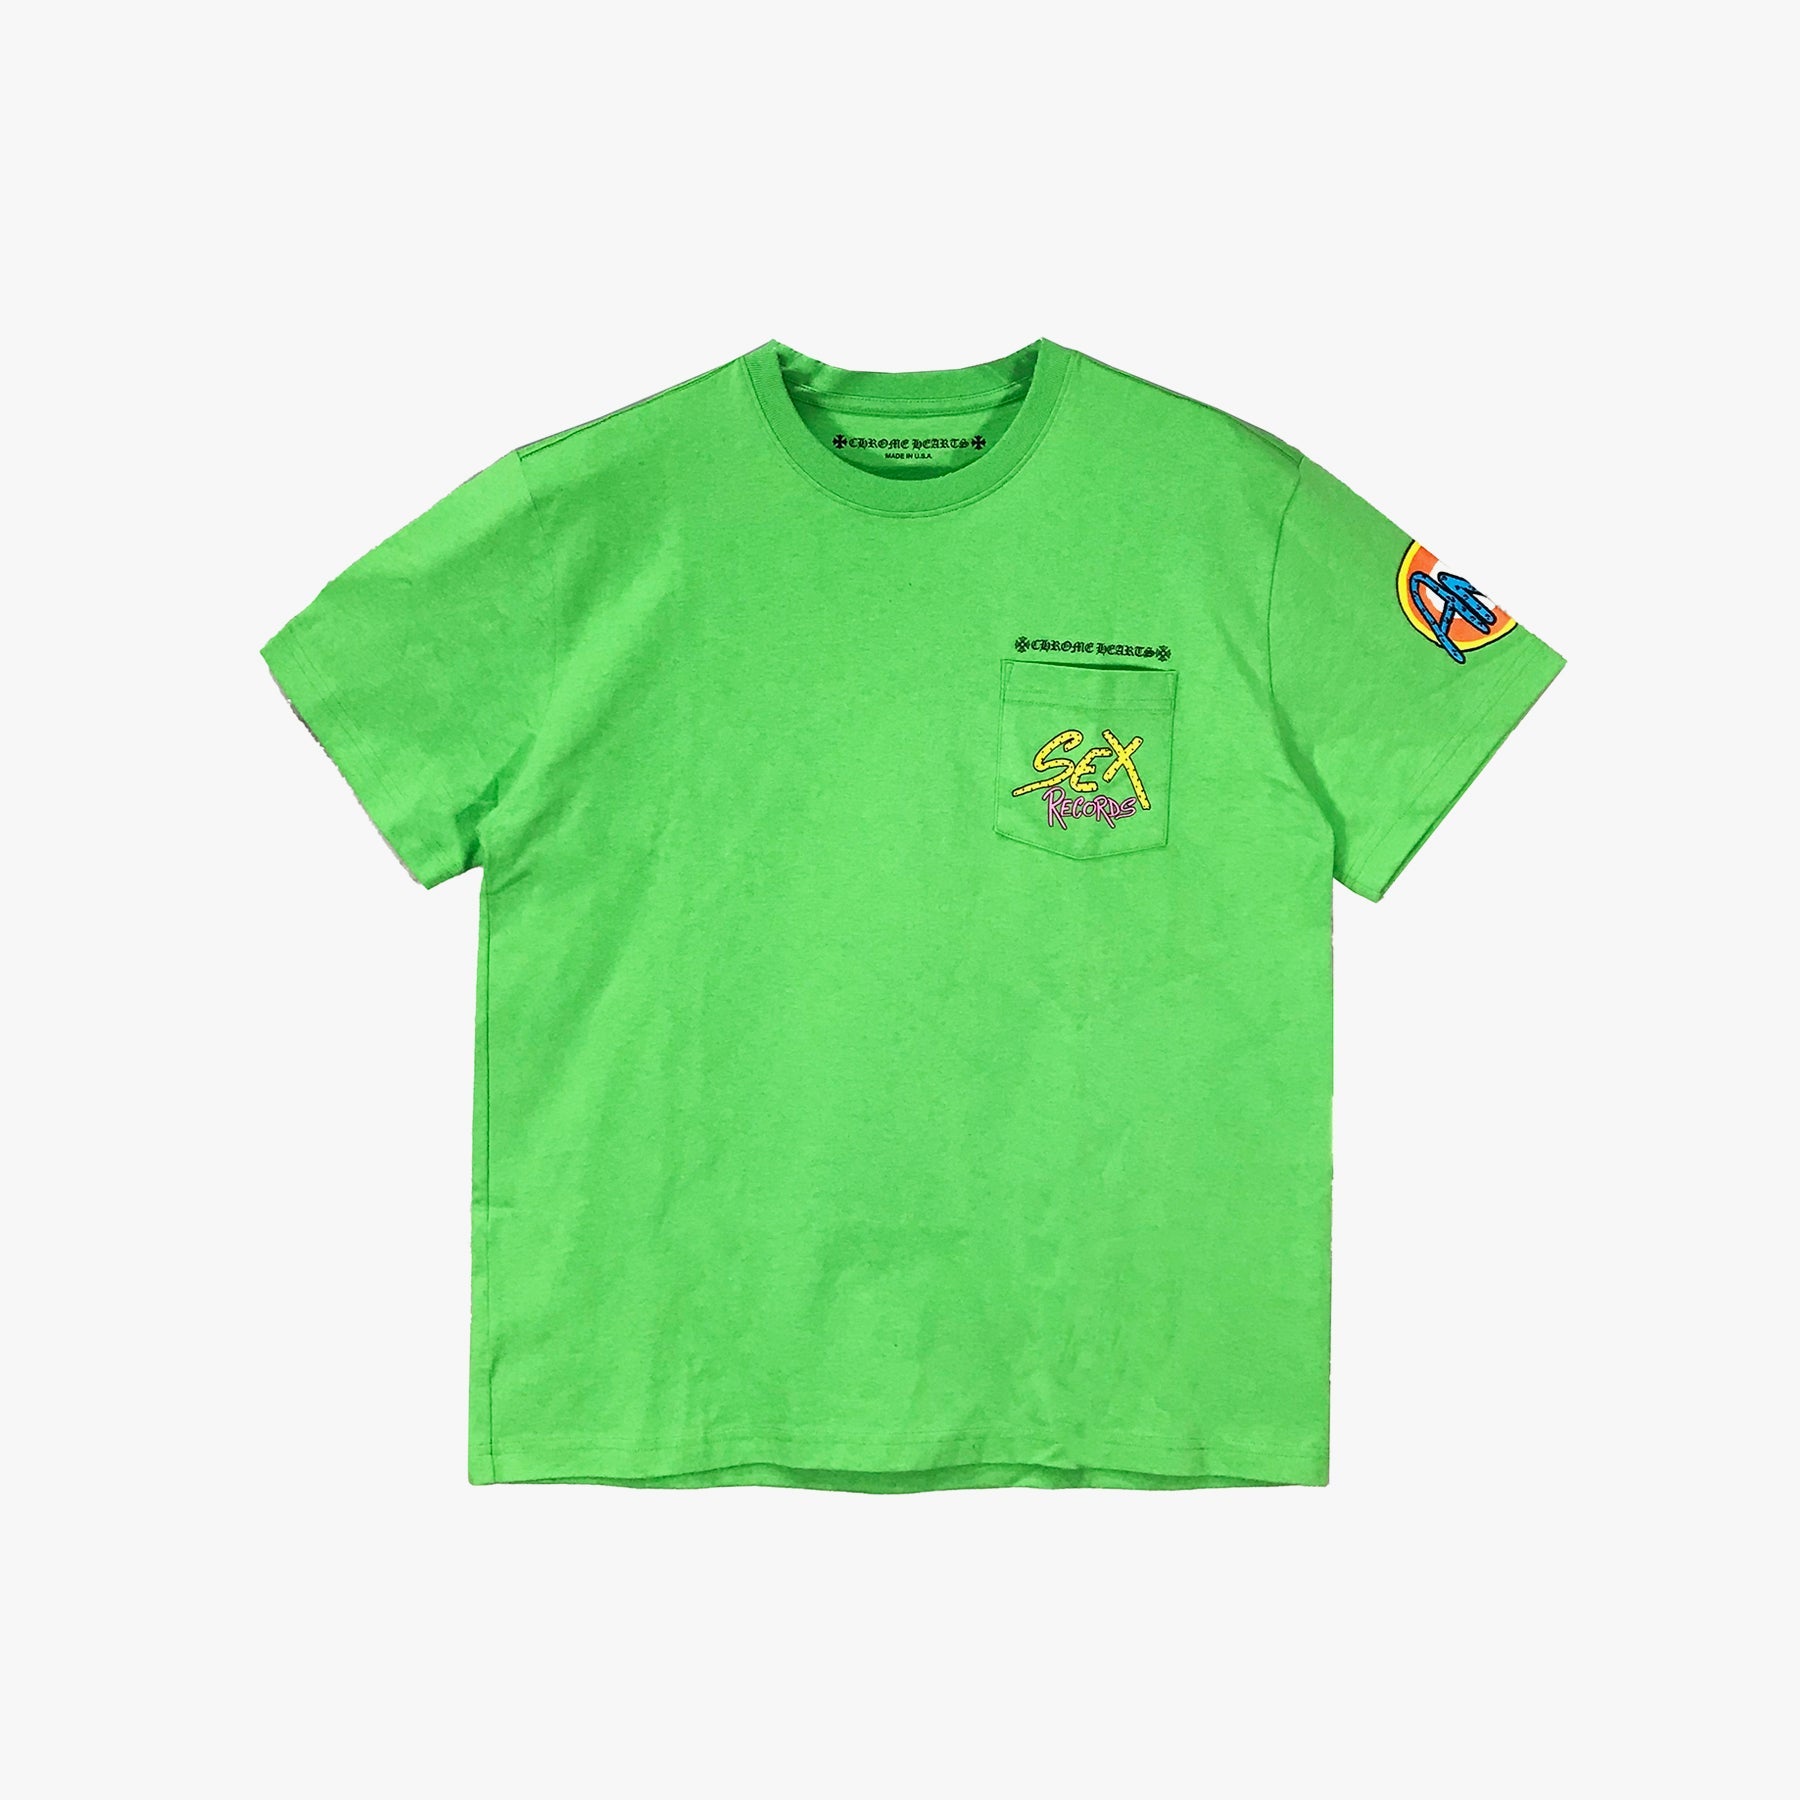 Chrome Hearts Matty Boy Limited Sex Record Green T-shirt